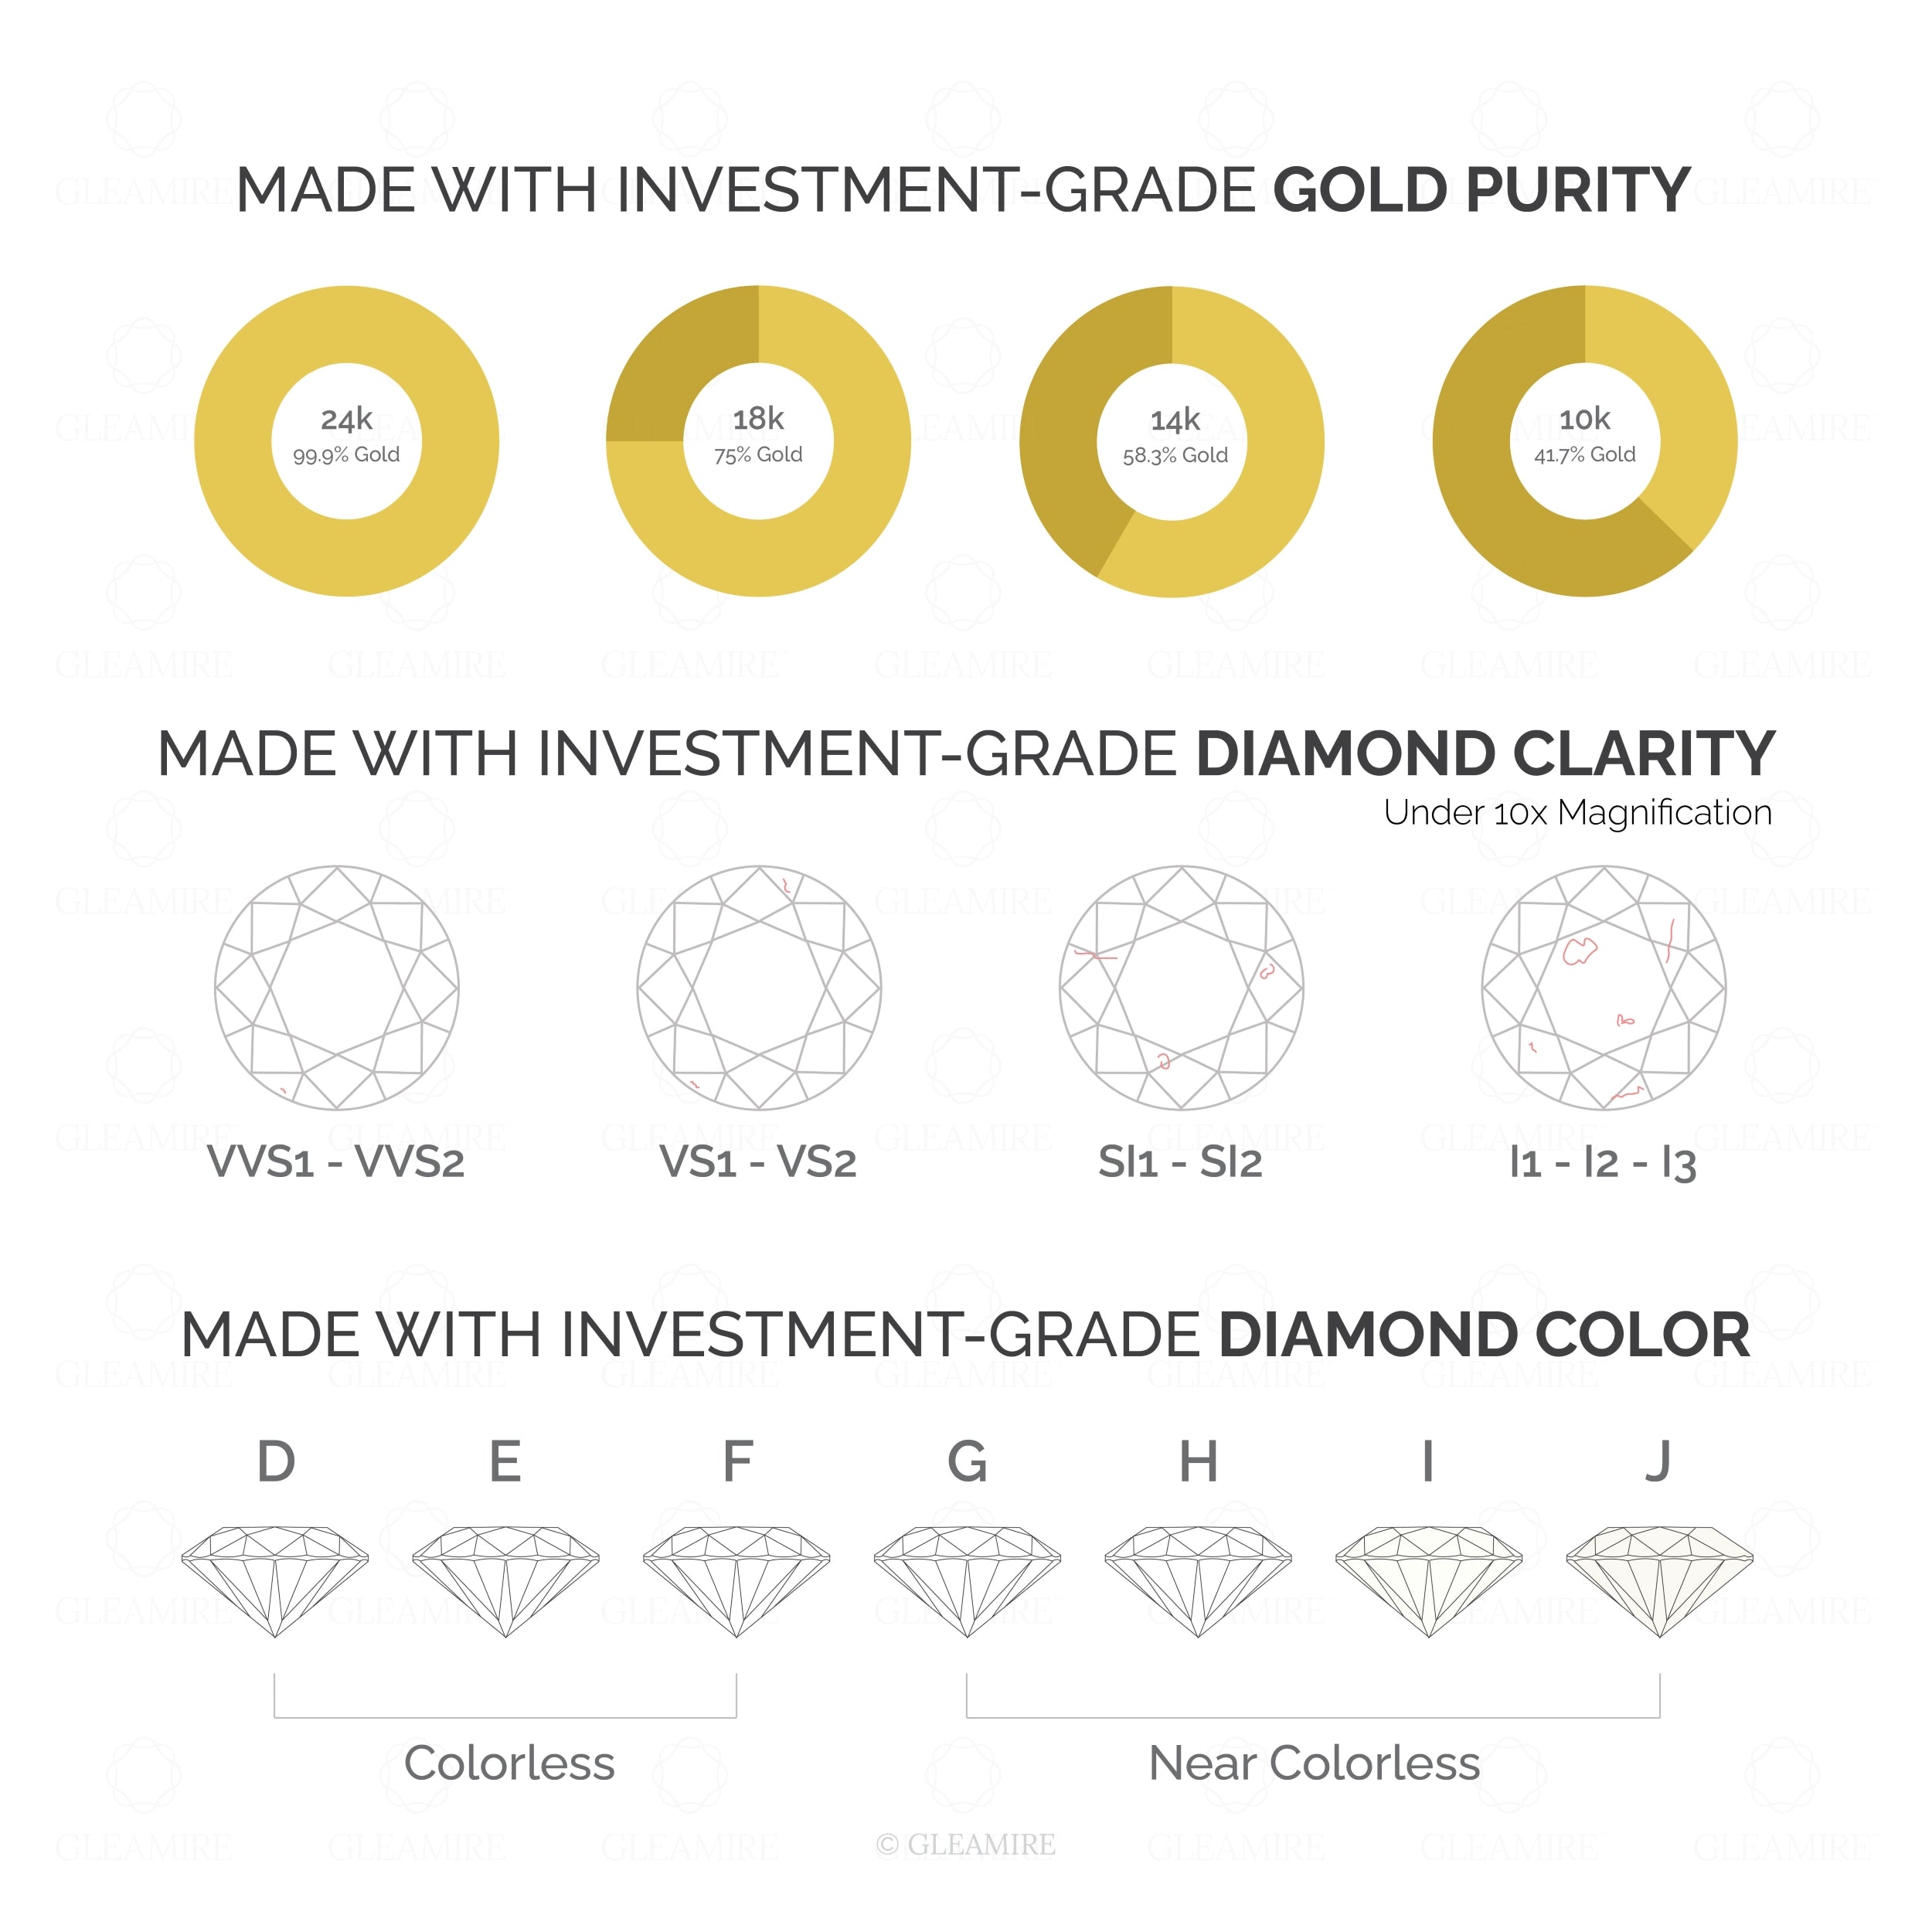 Certified 14K Gold 0.2ct Natural Diamond G-I1 Designer Wedding Band White Ring